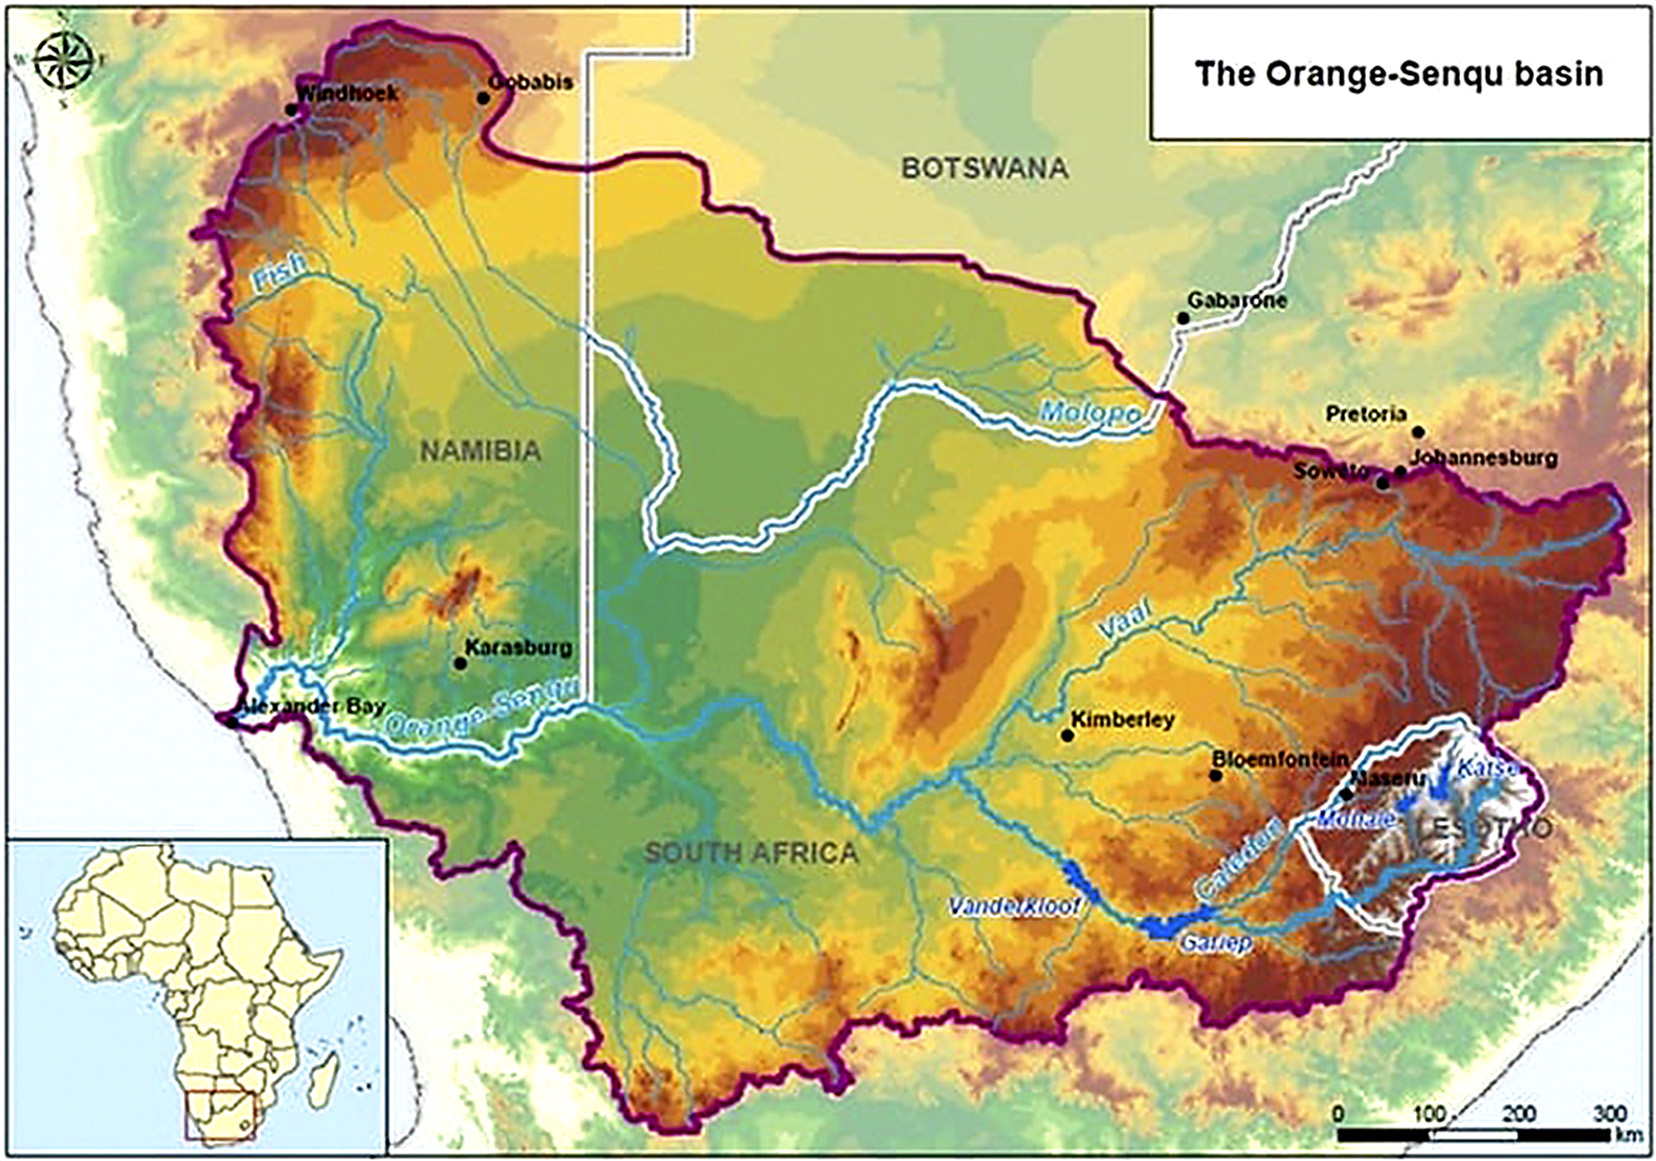 Orange-Senqu basin